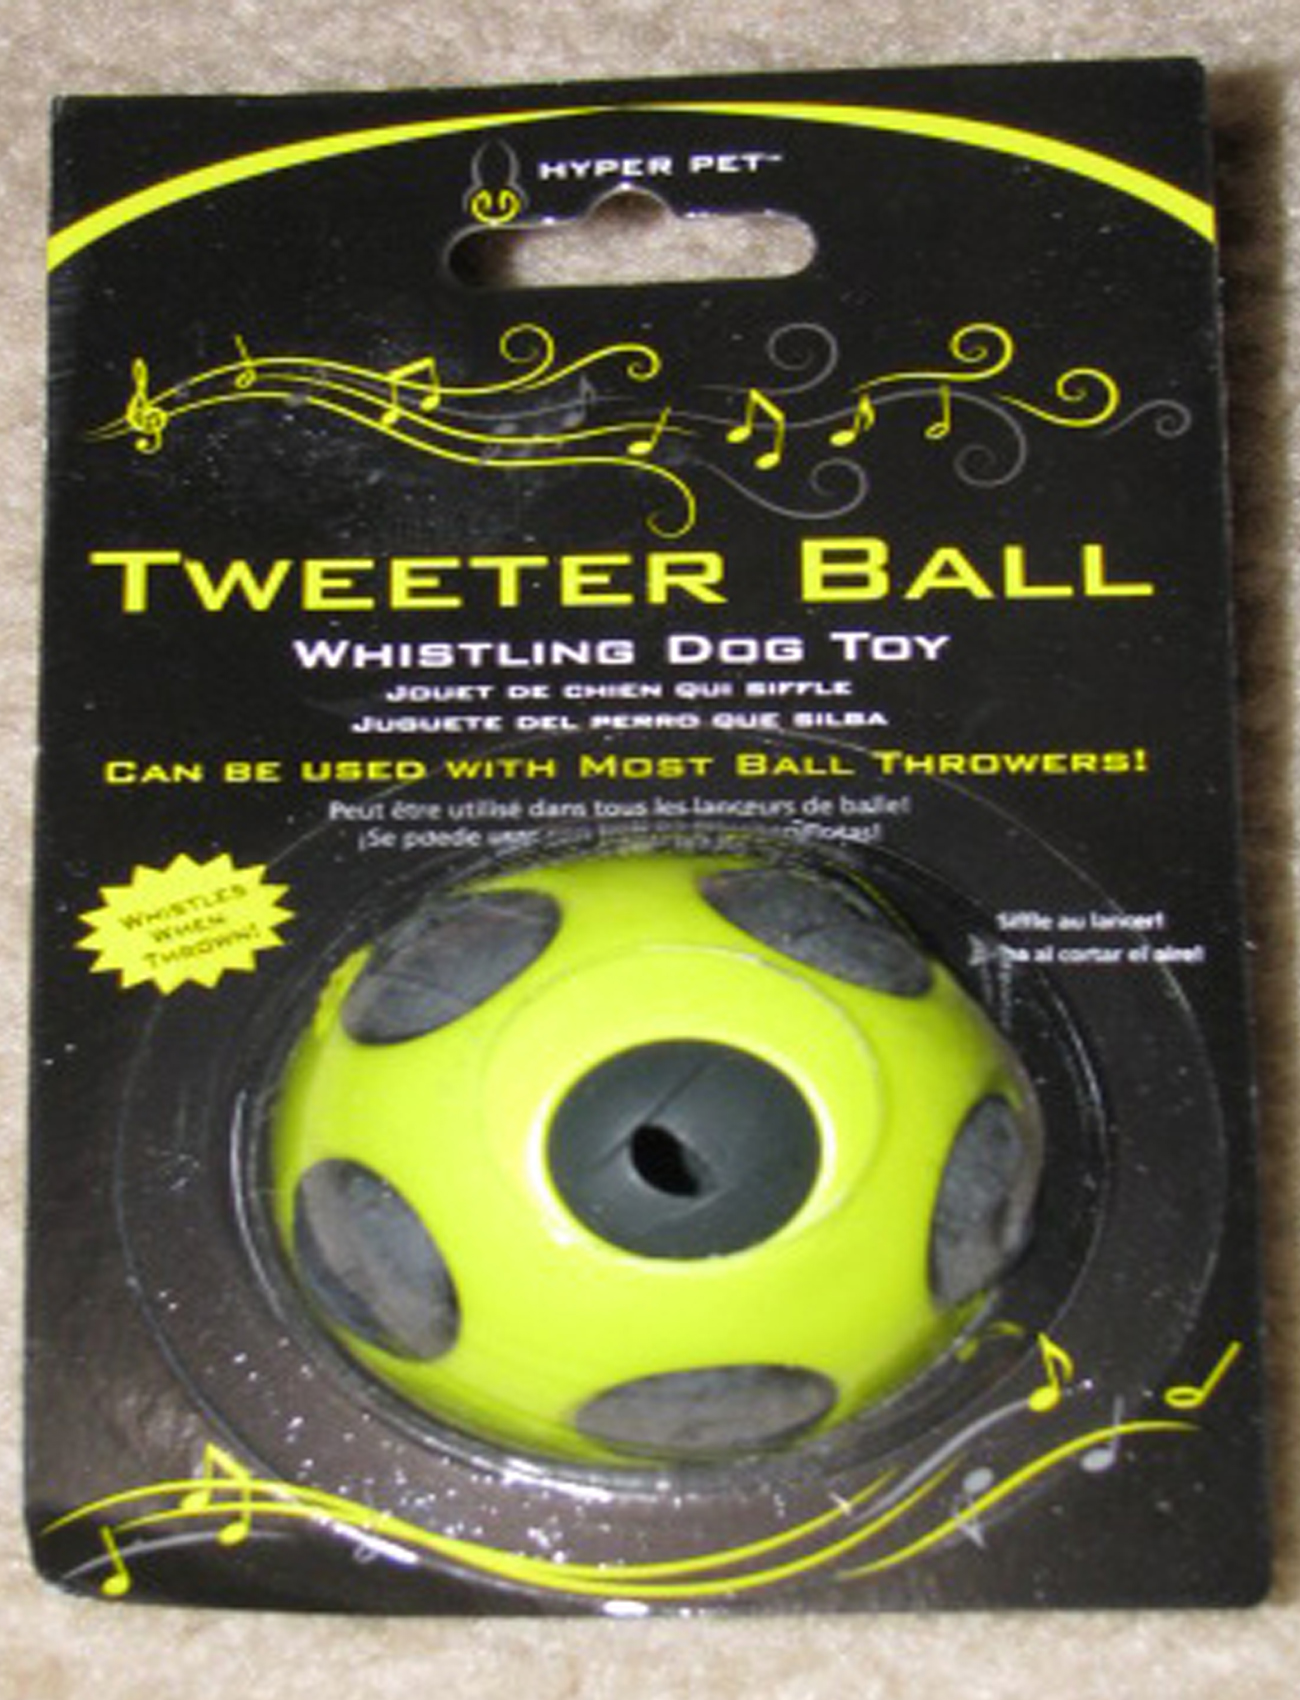 Whistling dog ball from Hyper Pet.